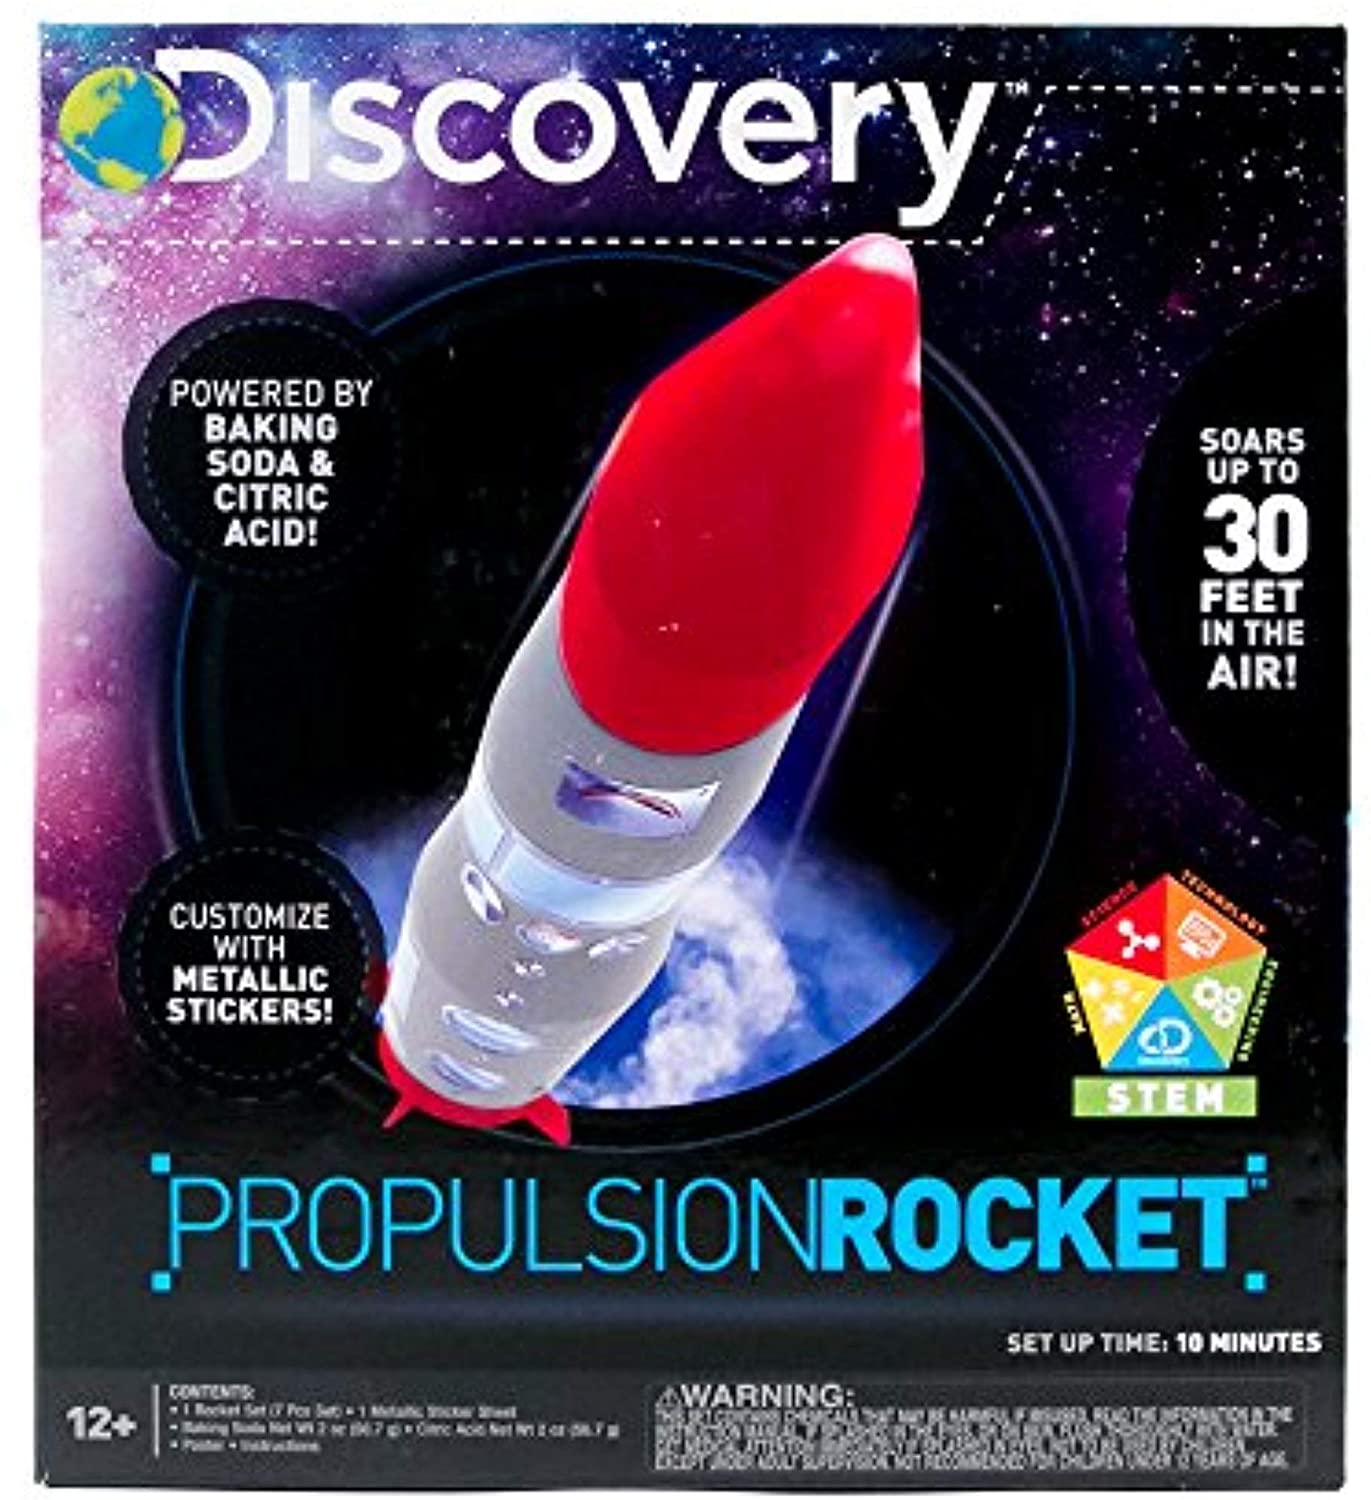 Propulsion Rocket